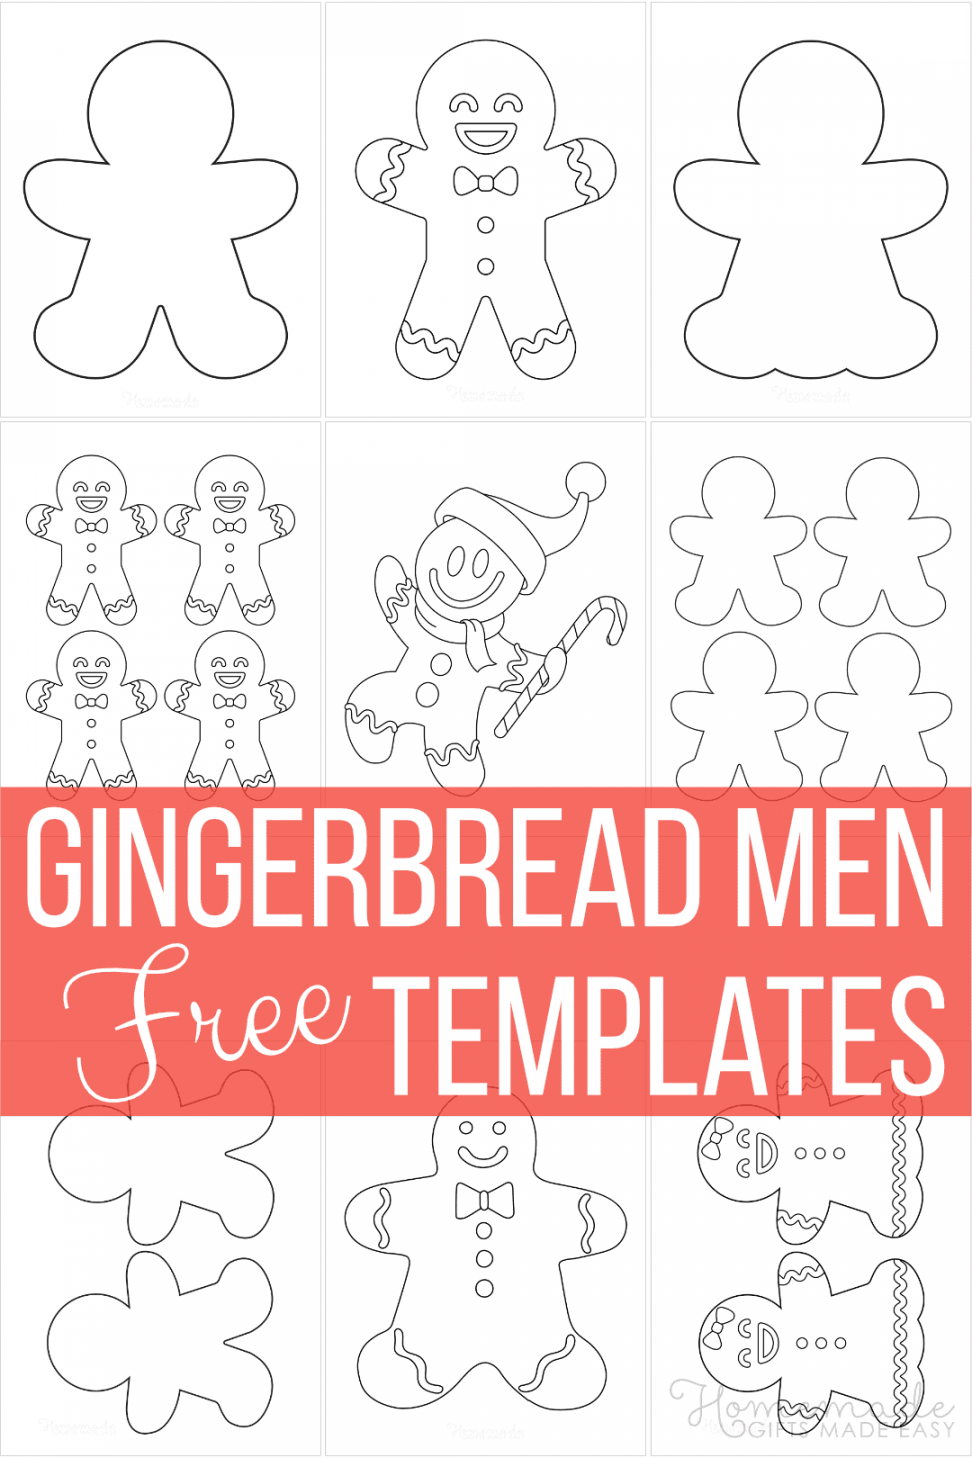 Free Printable Gingerbread Man Templates & Coloring Pages - FREE Printables - Free Gingerbread Printable